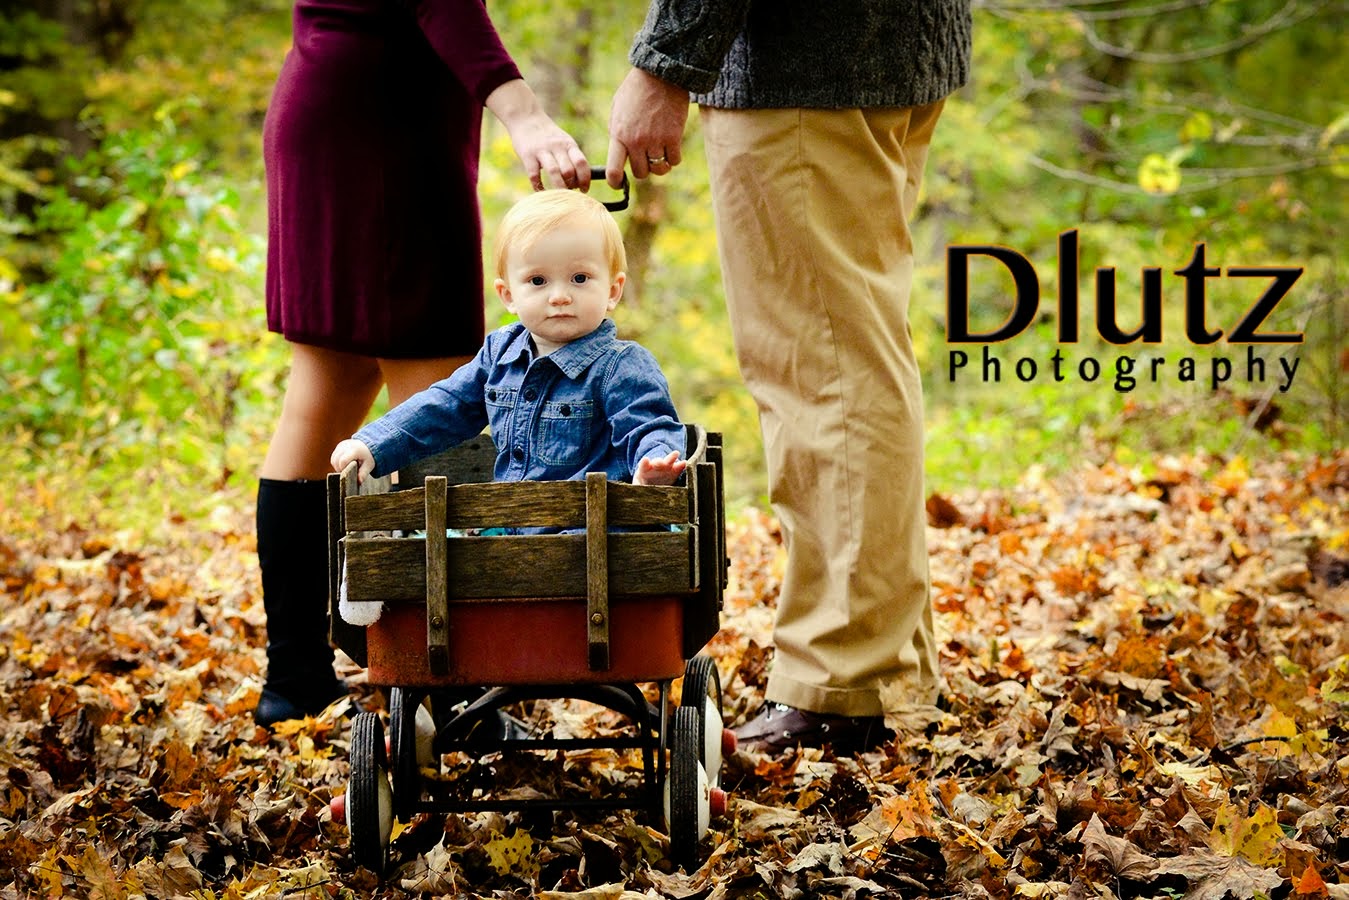 Dlutz Photography, Inc